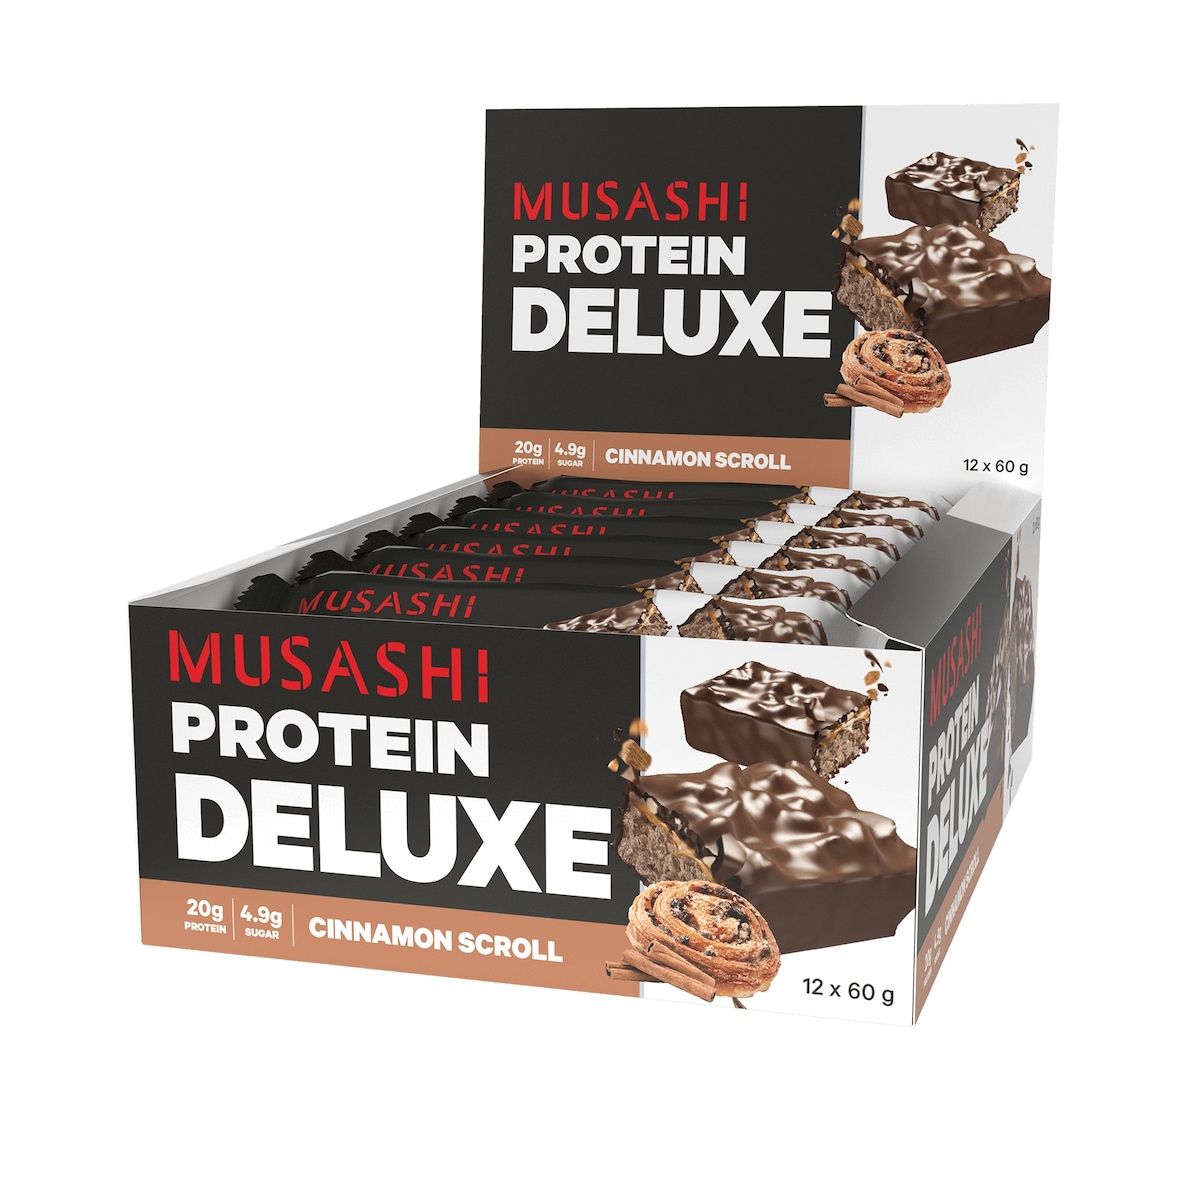 Musashi Deluxe Protein Bar Cinnamon Scroll 12 x 60g Australia